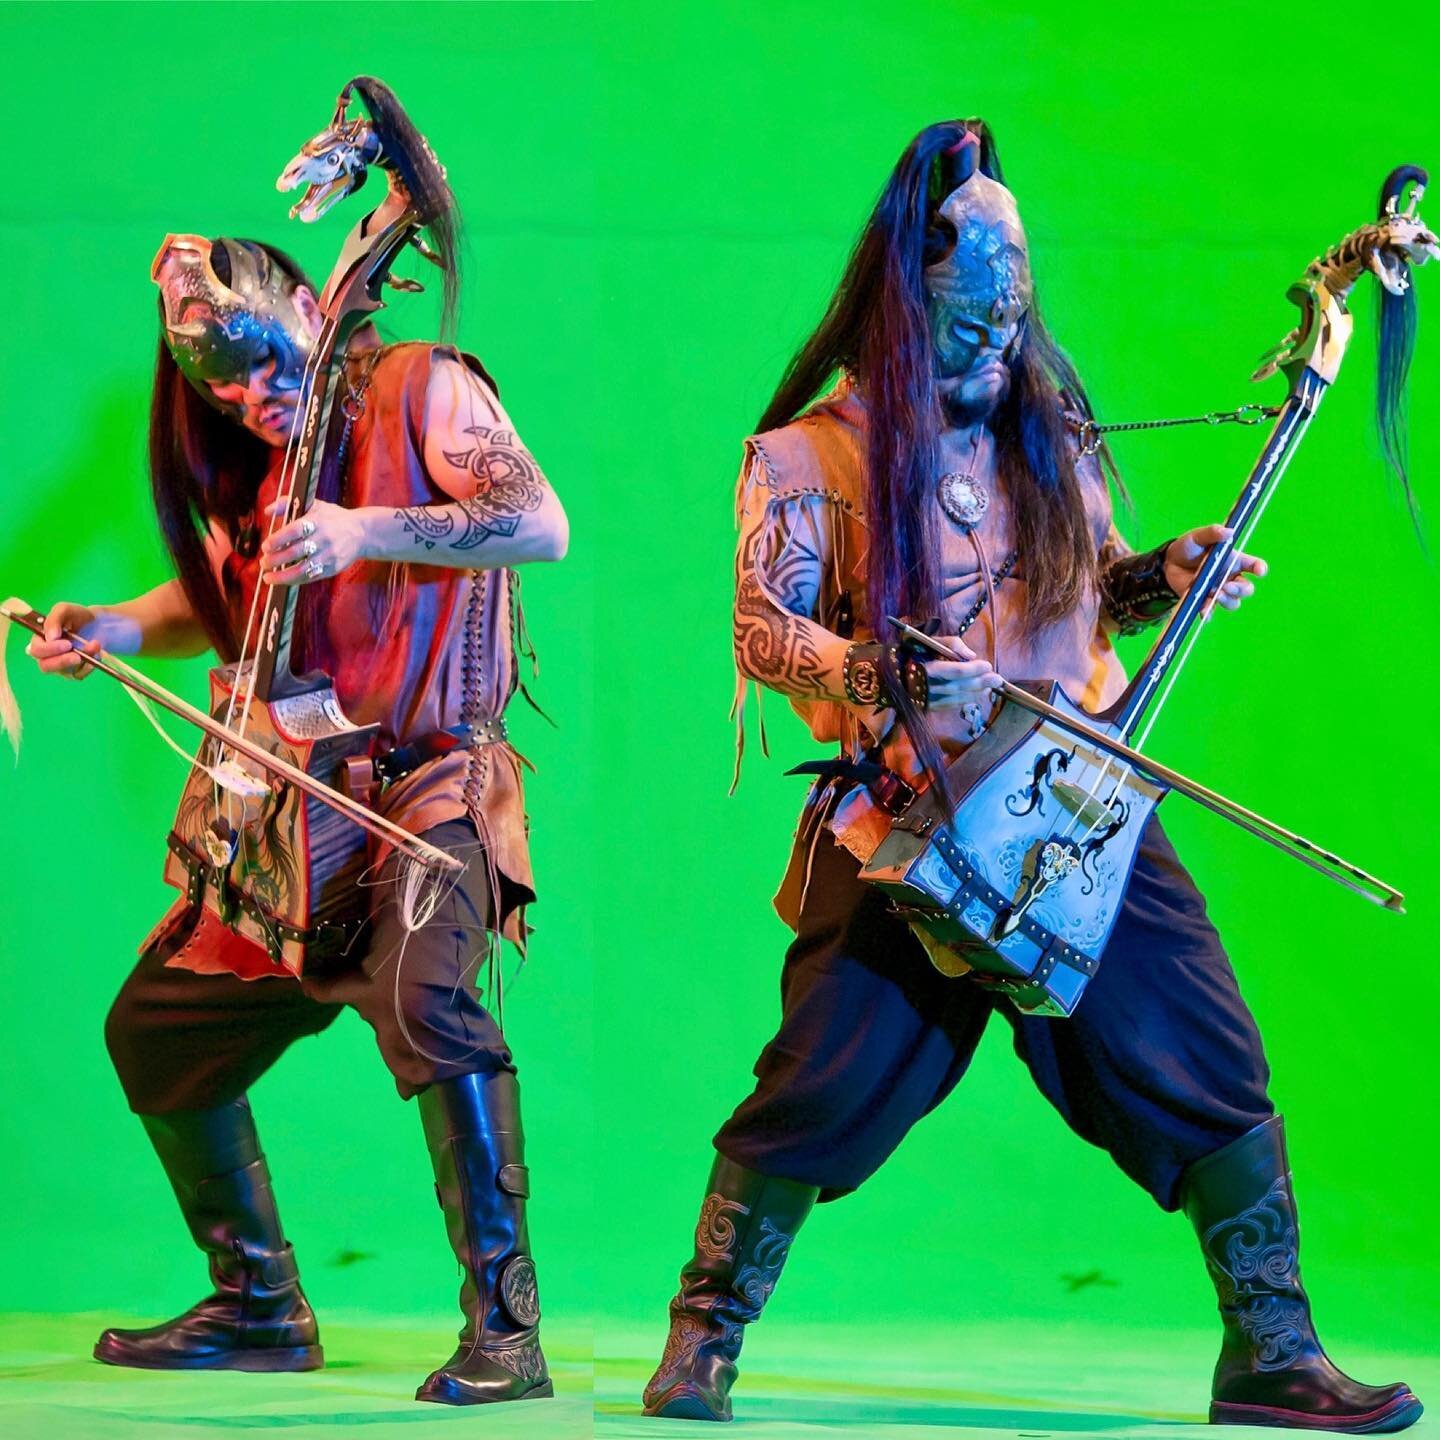 Shinee and Zorigoo in the making of Ser Ser
.
.
.
#mongolianrock #mongolrock #uuhai #mongolianmetalmusic